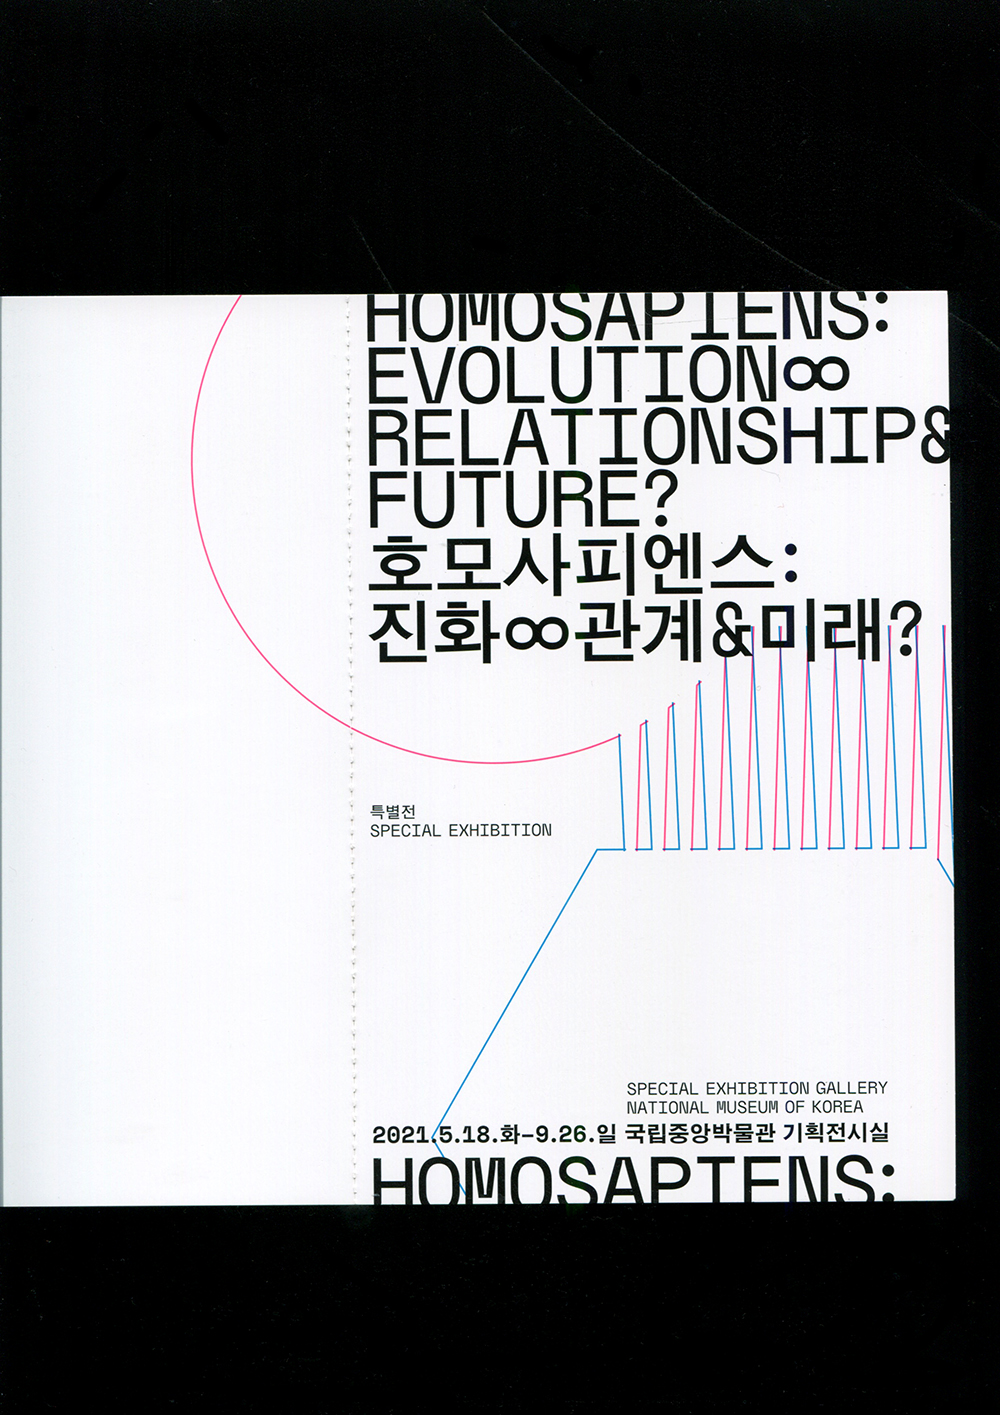 homosapiens: evolution∞ relationship& future? — generalgraphics